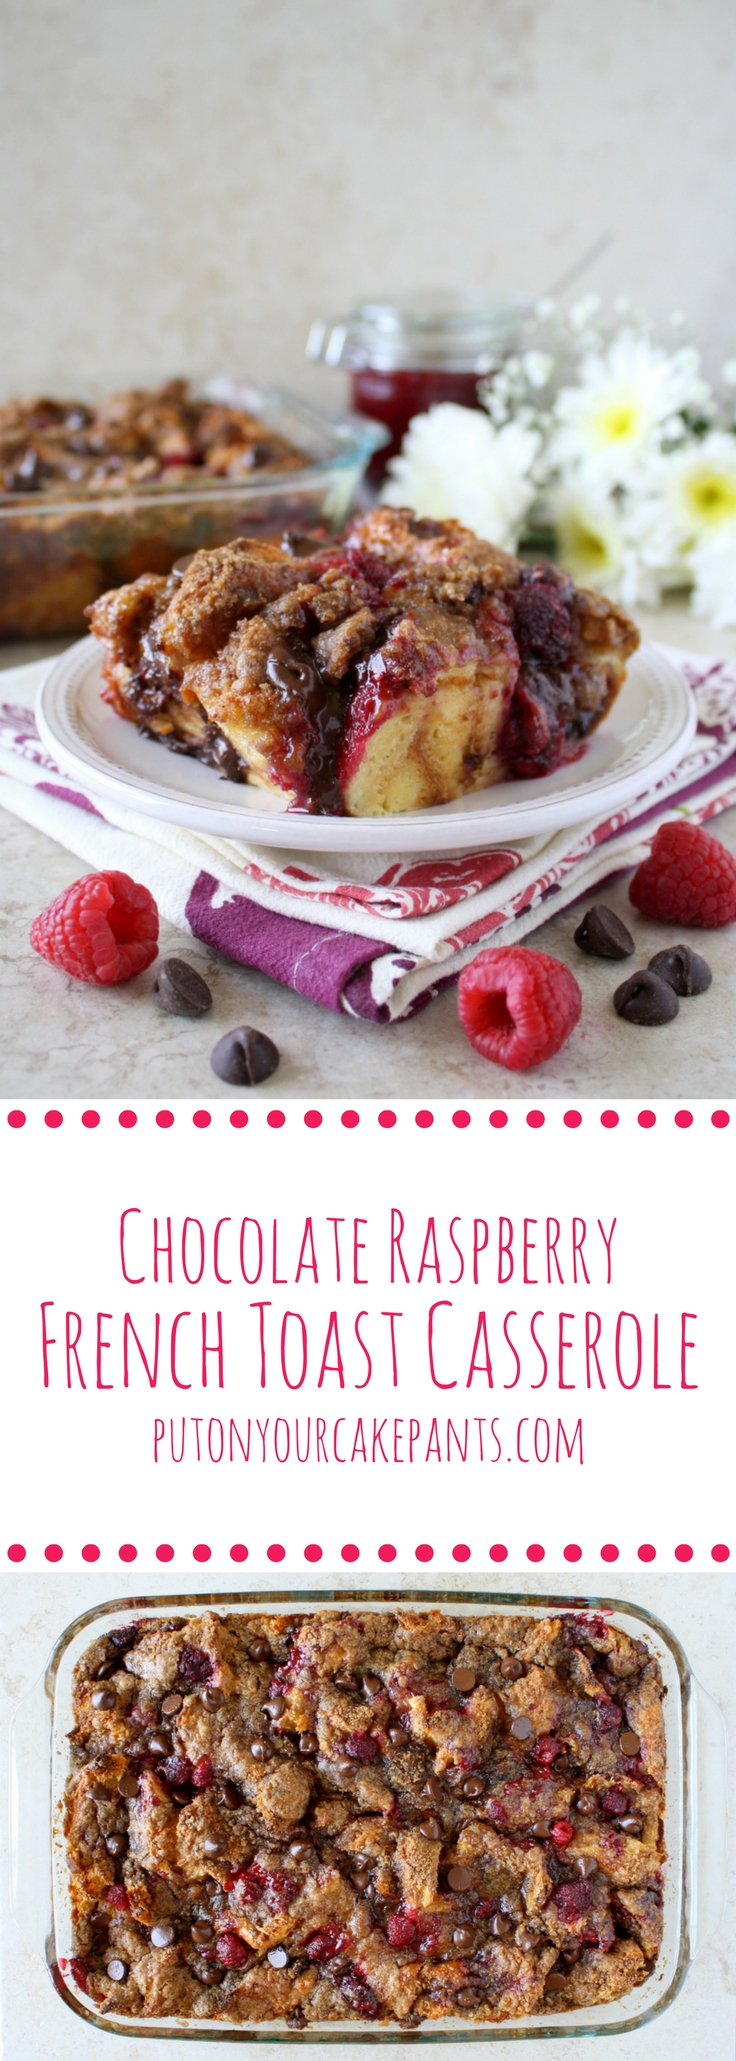 chocolate raspberry French toast casserole